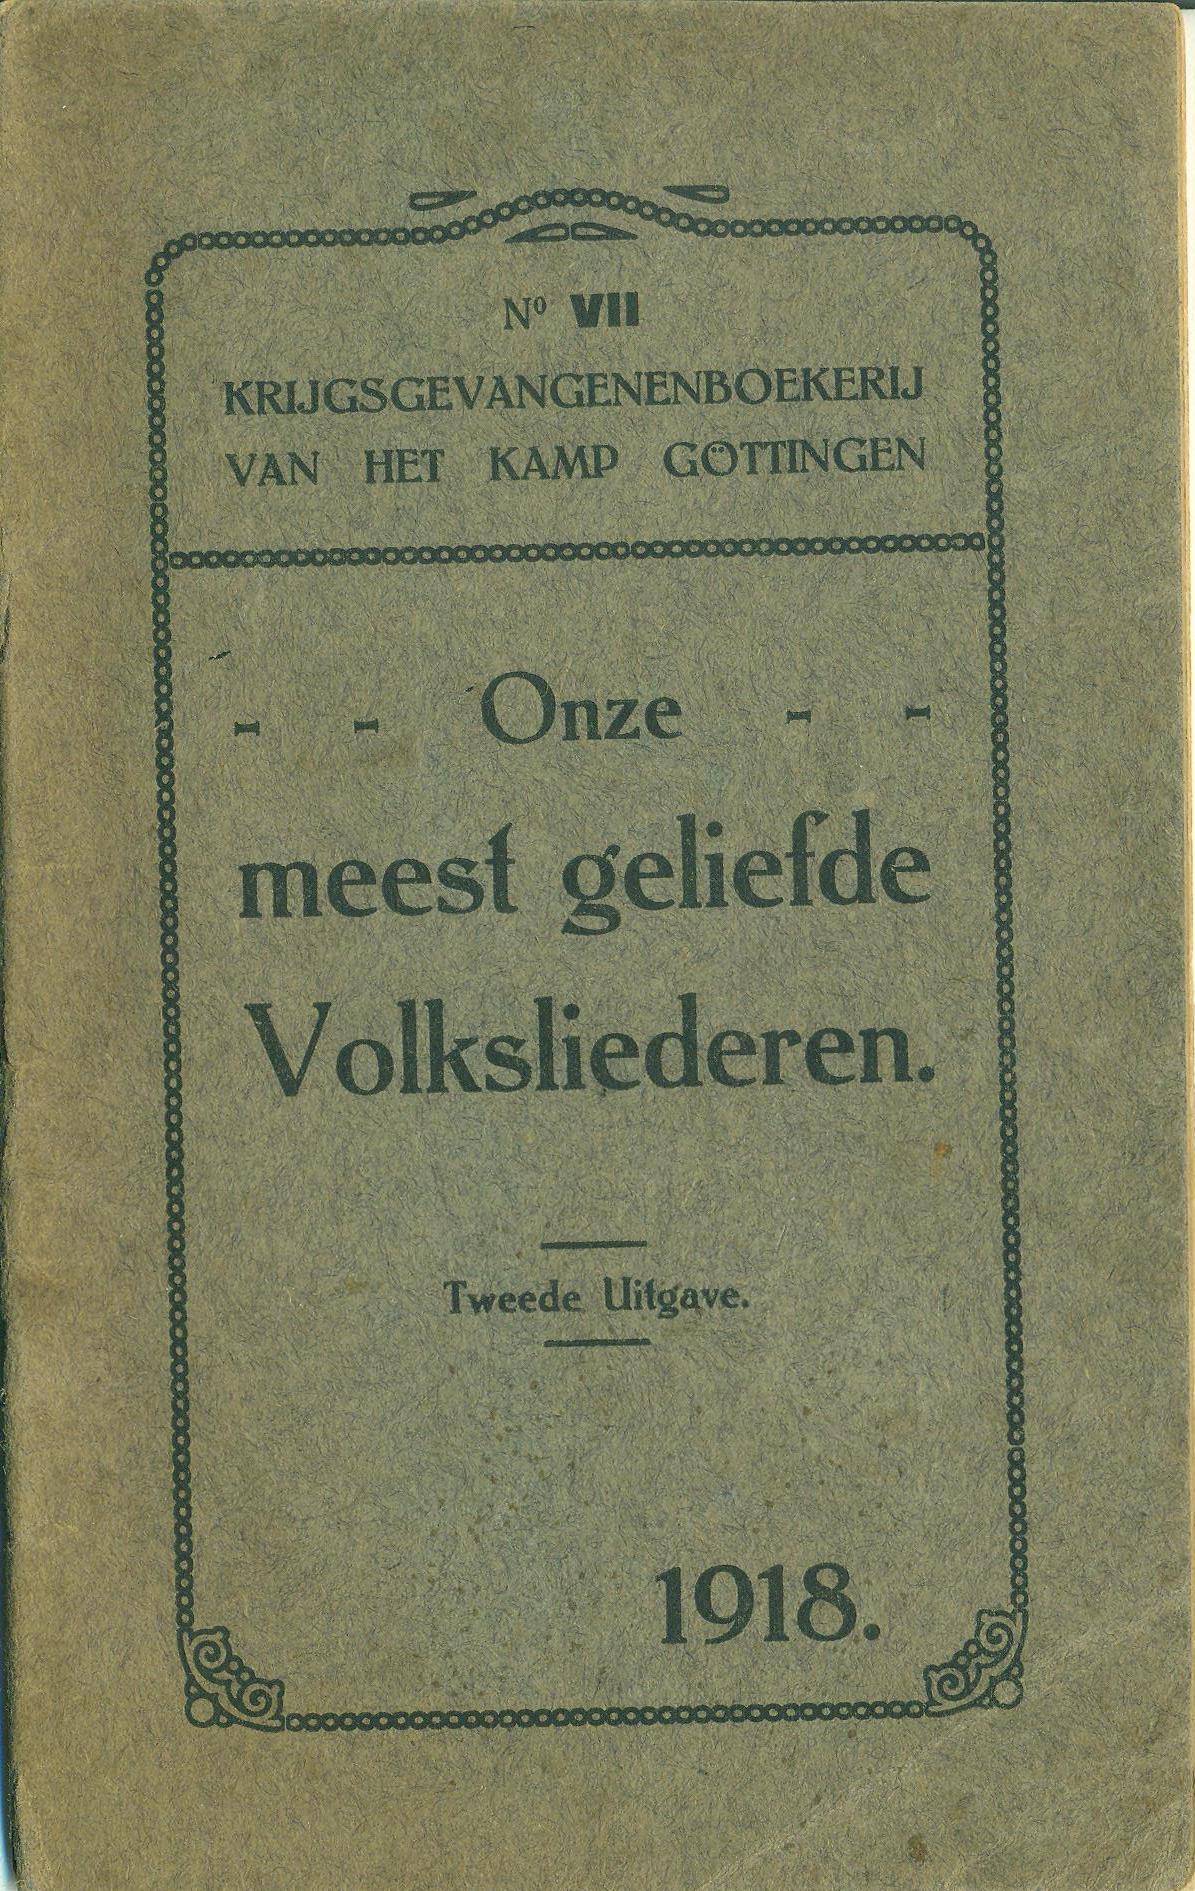 songbook 1918